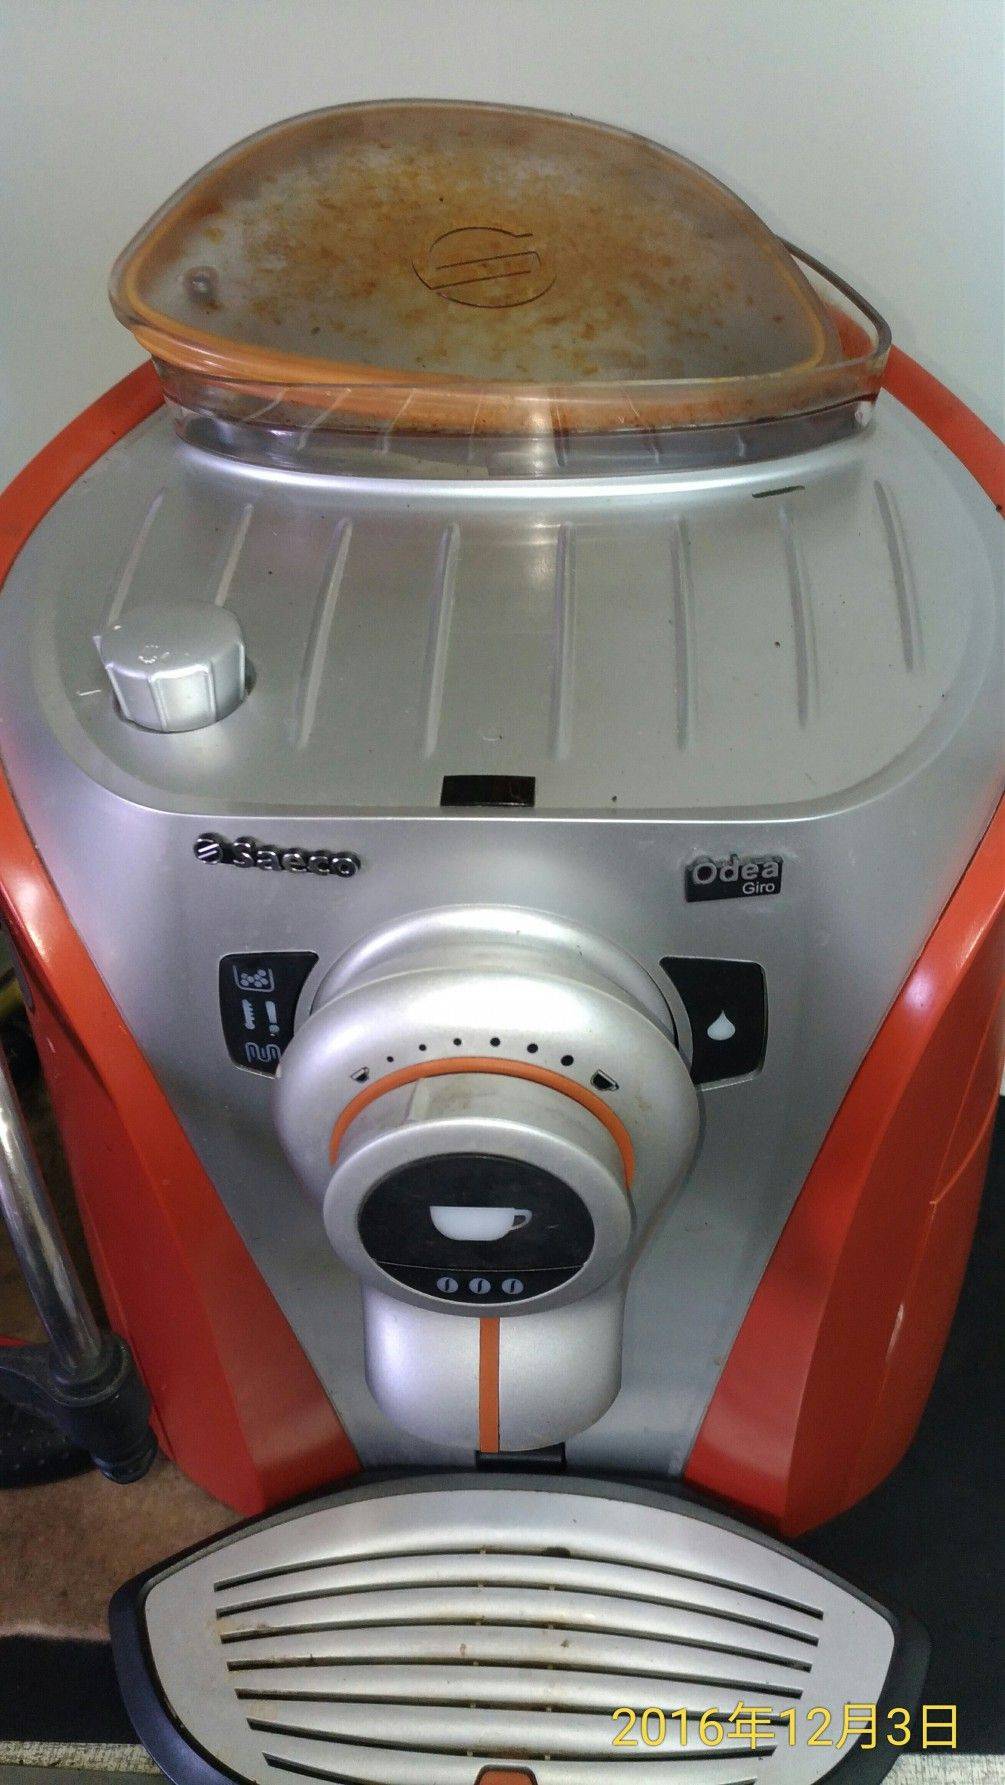 saeco-odea全自動咖啡機維修105.12.3林先生處理保養